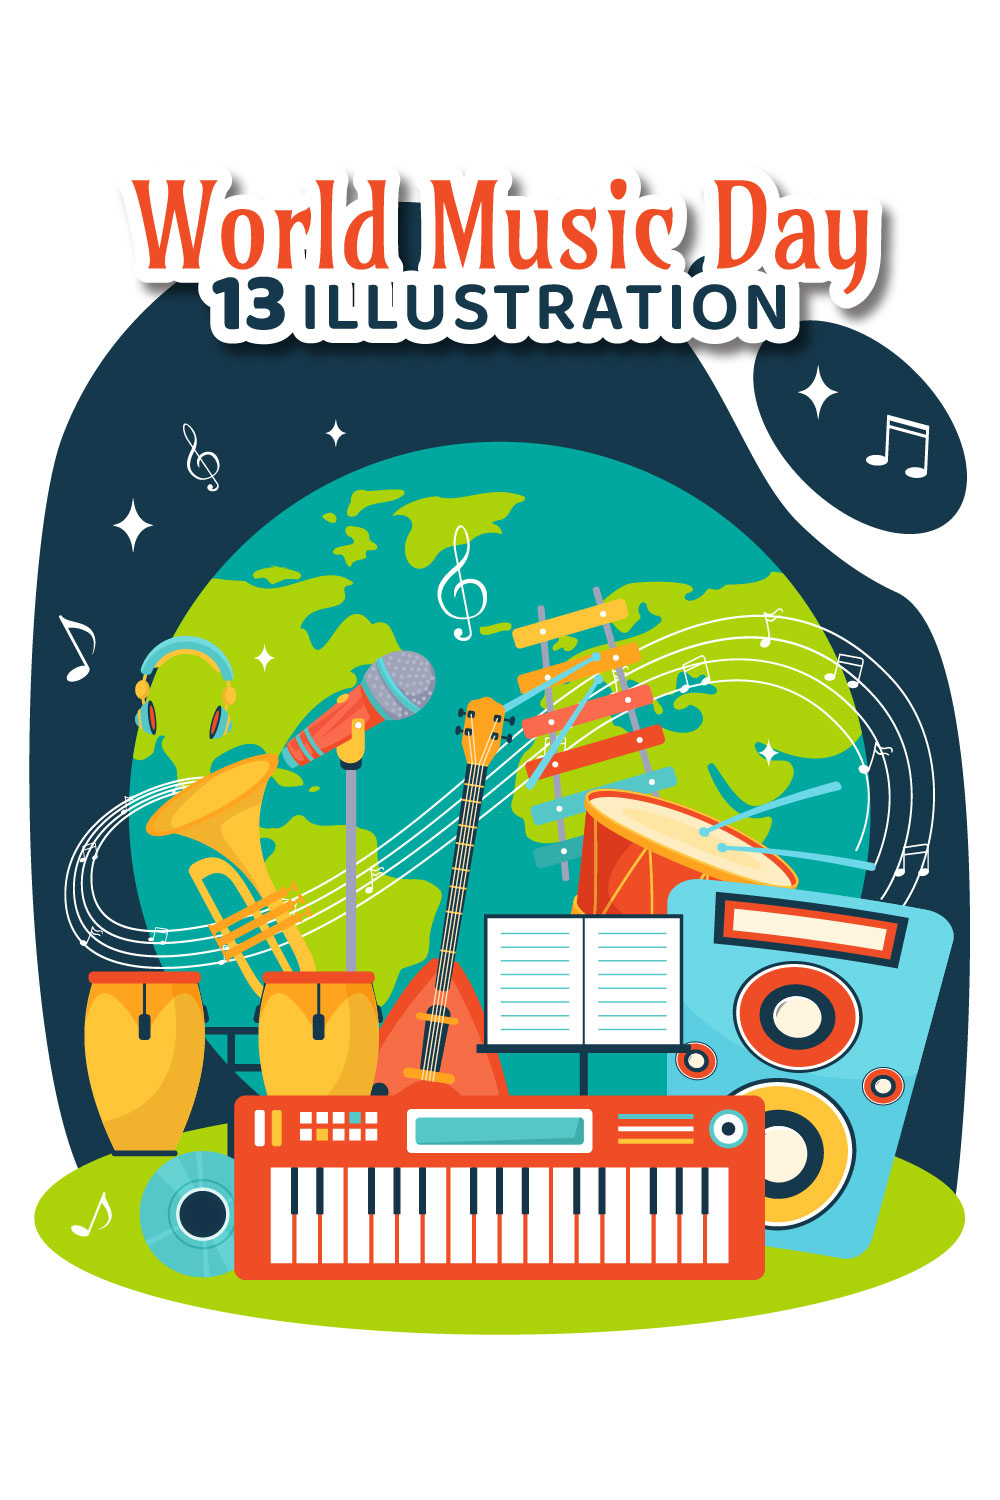 13 World Music Day Illustration pinterest preview image.